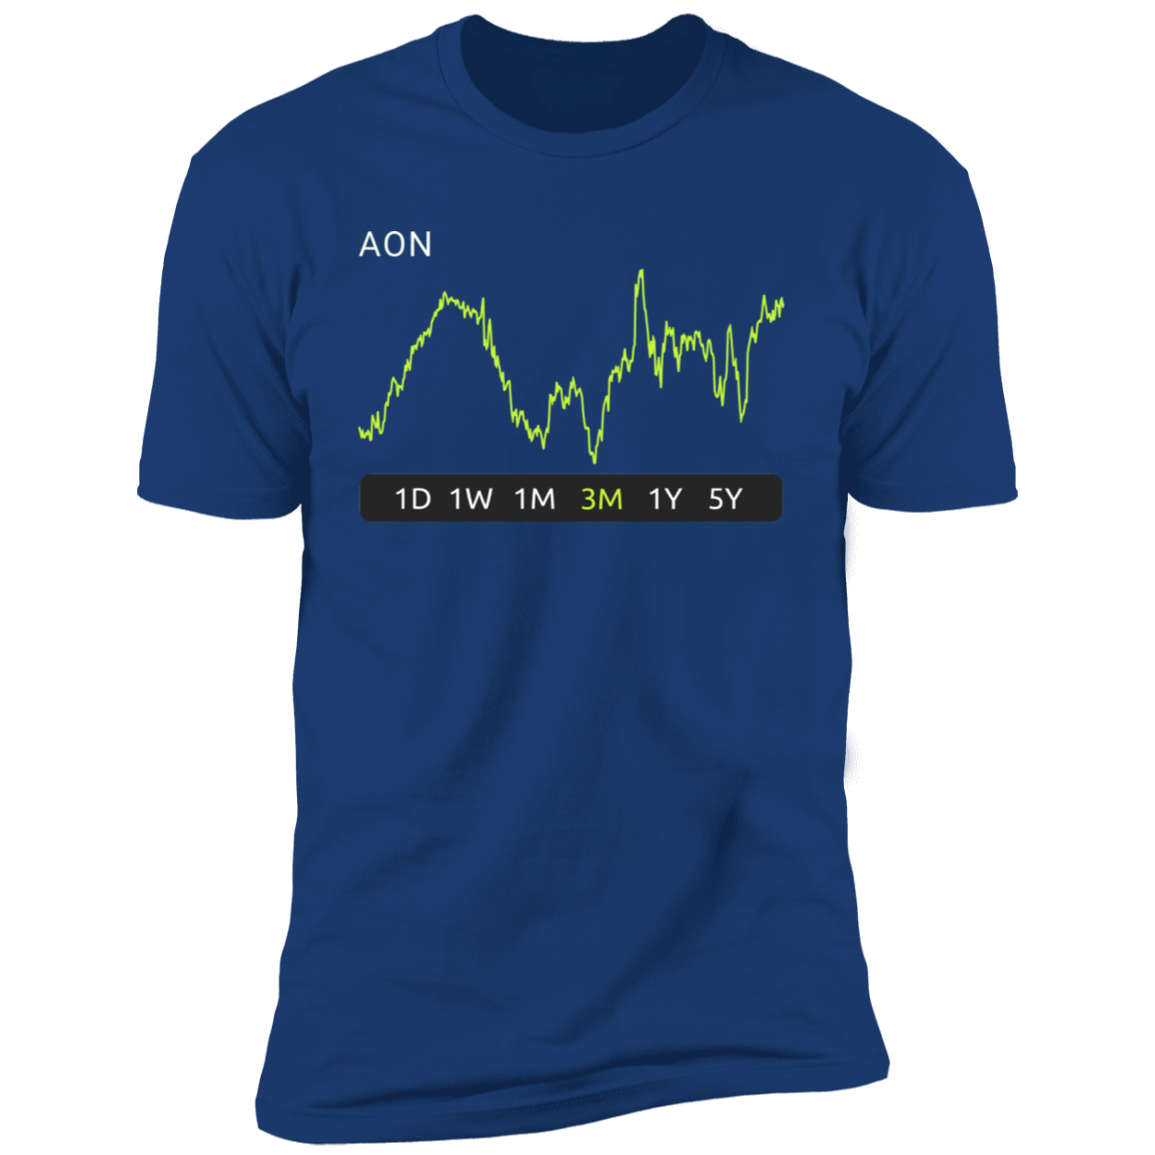 AON Stock 3m Premium T-Shirt